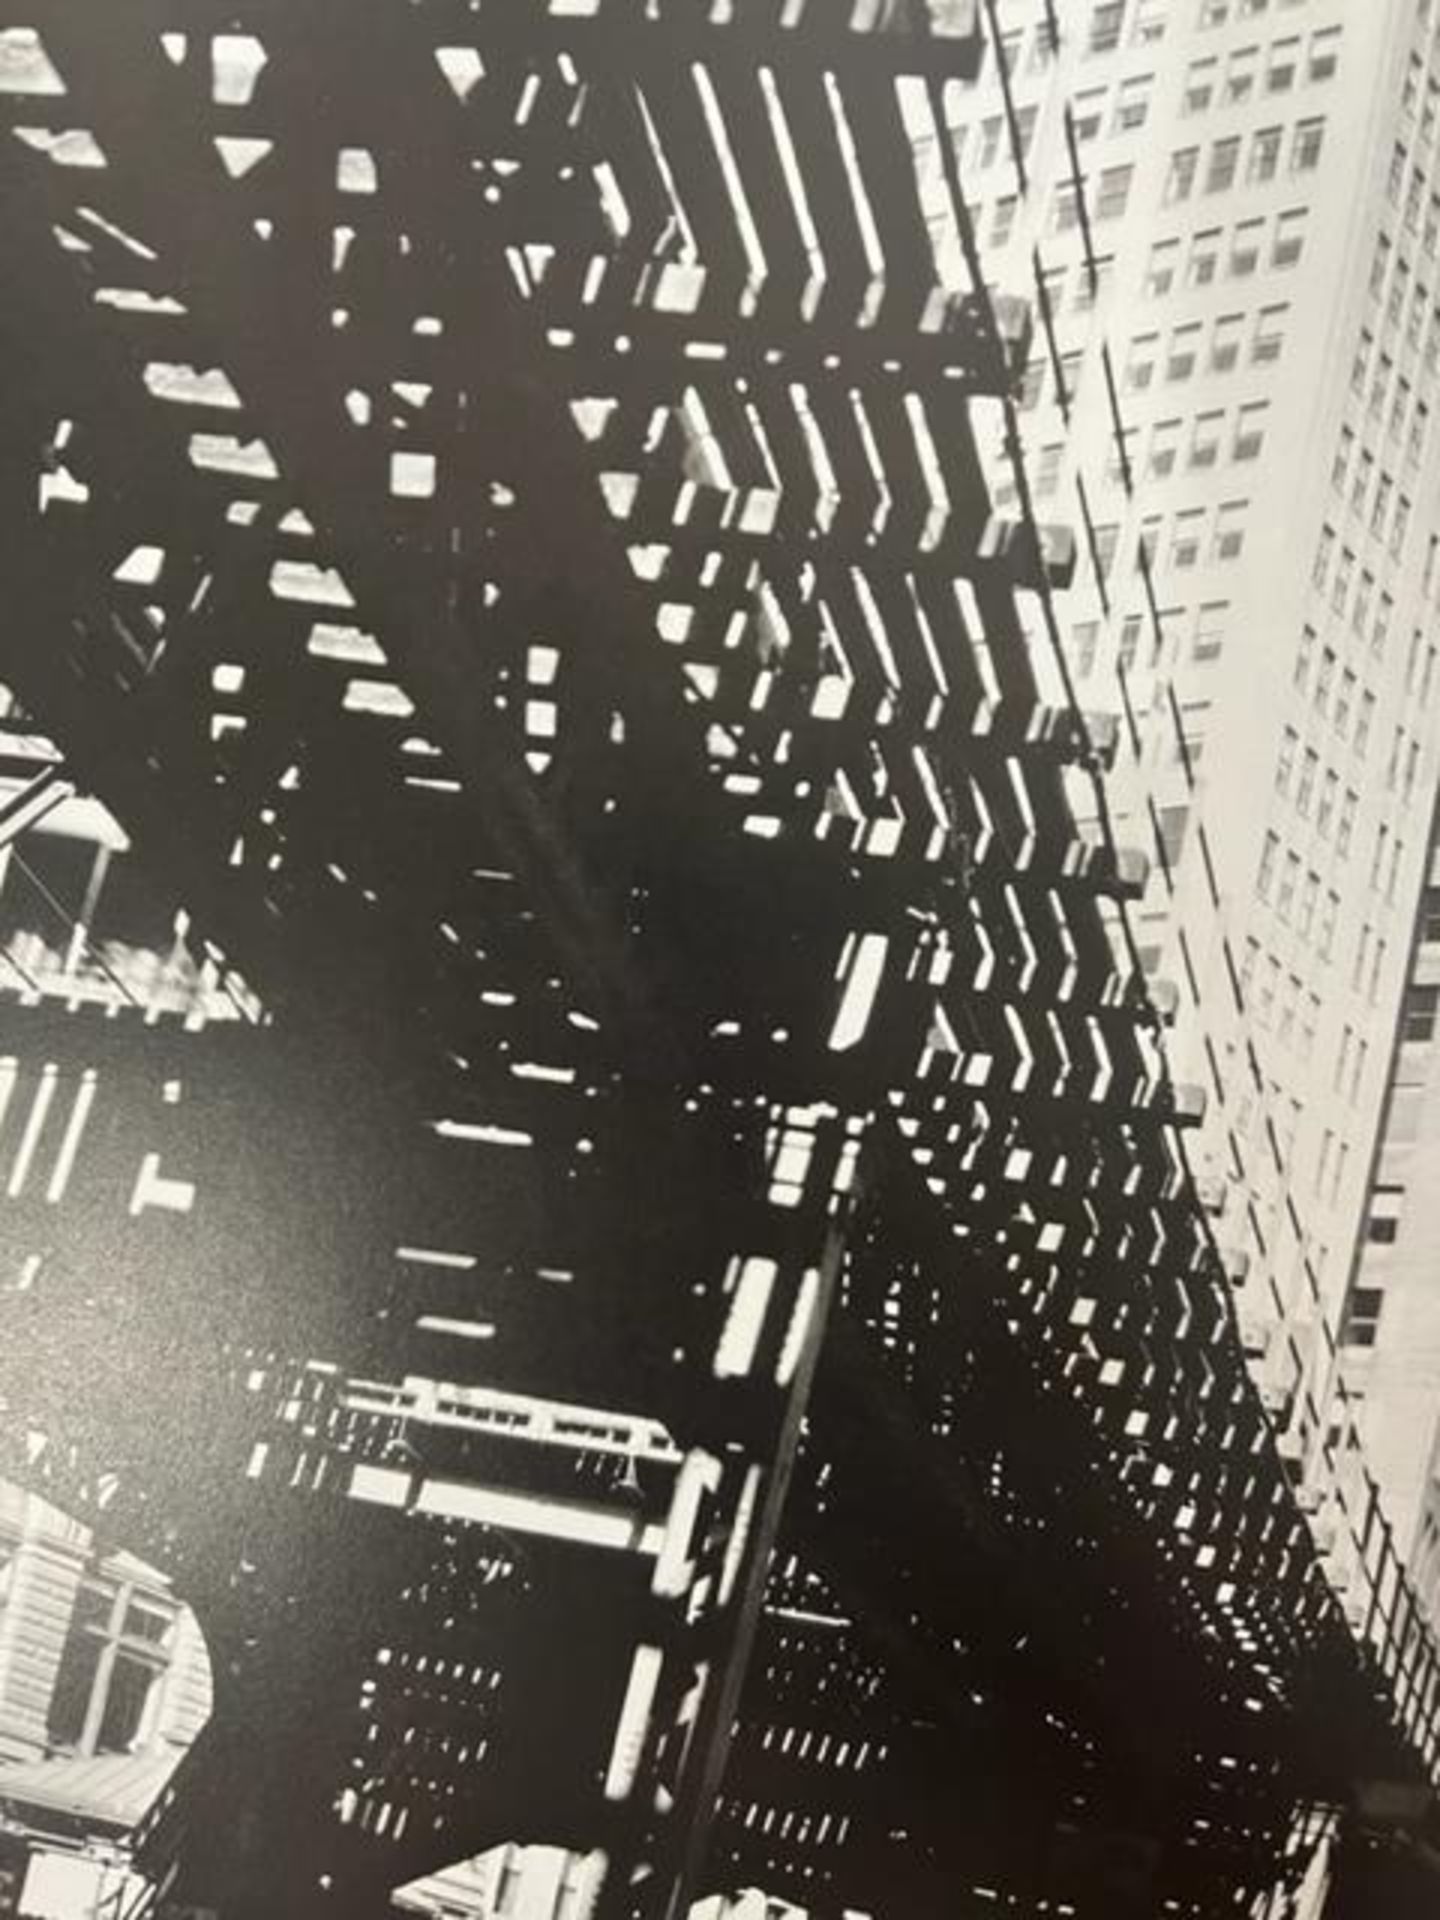 Berenice Abbott "El, Second and Third Avenue Lines" Print.